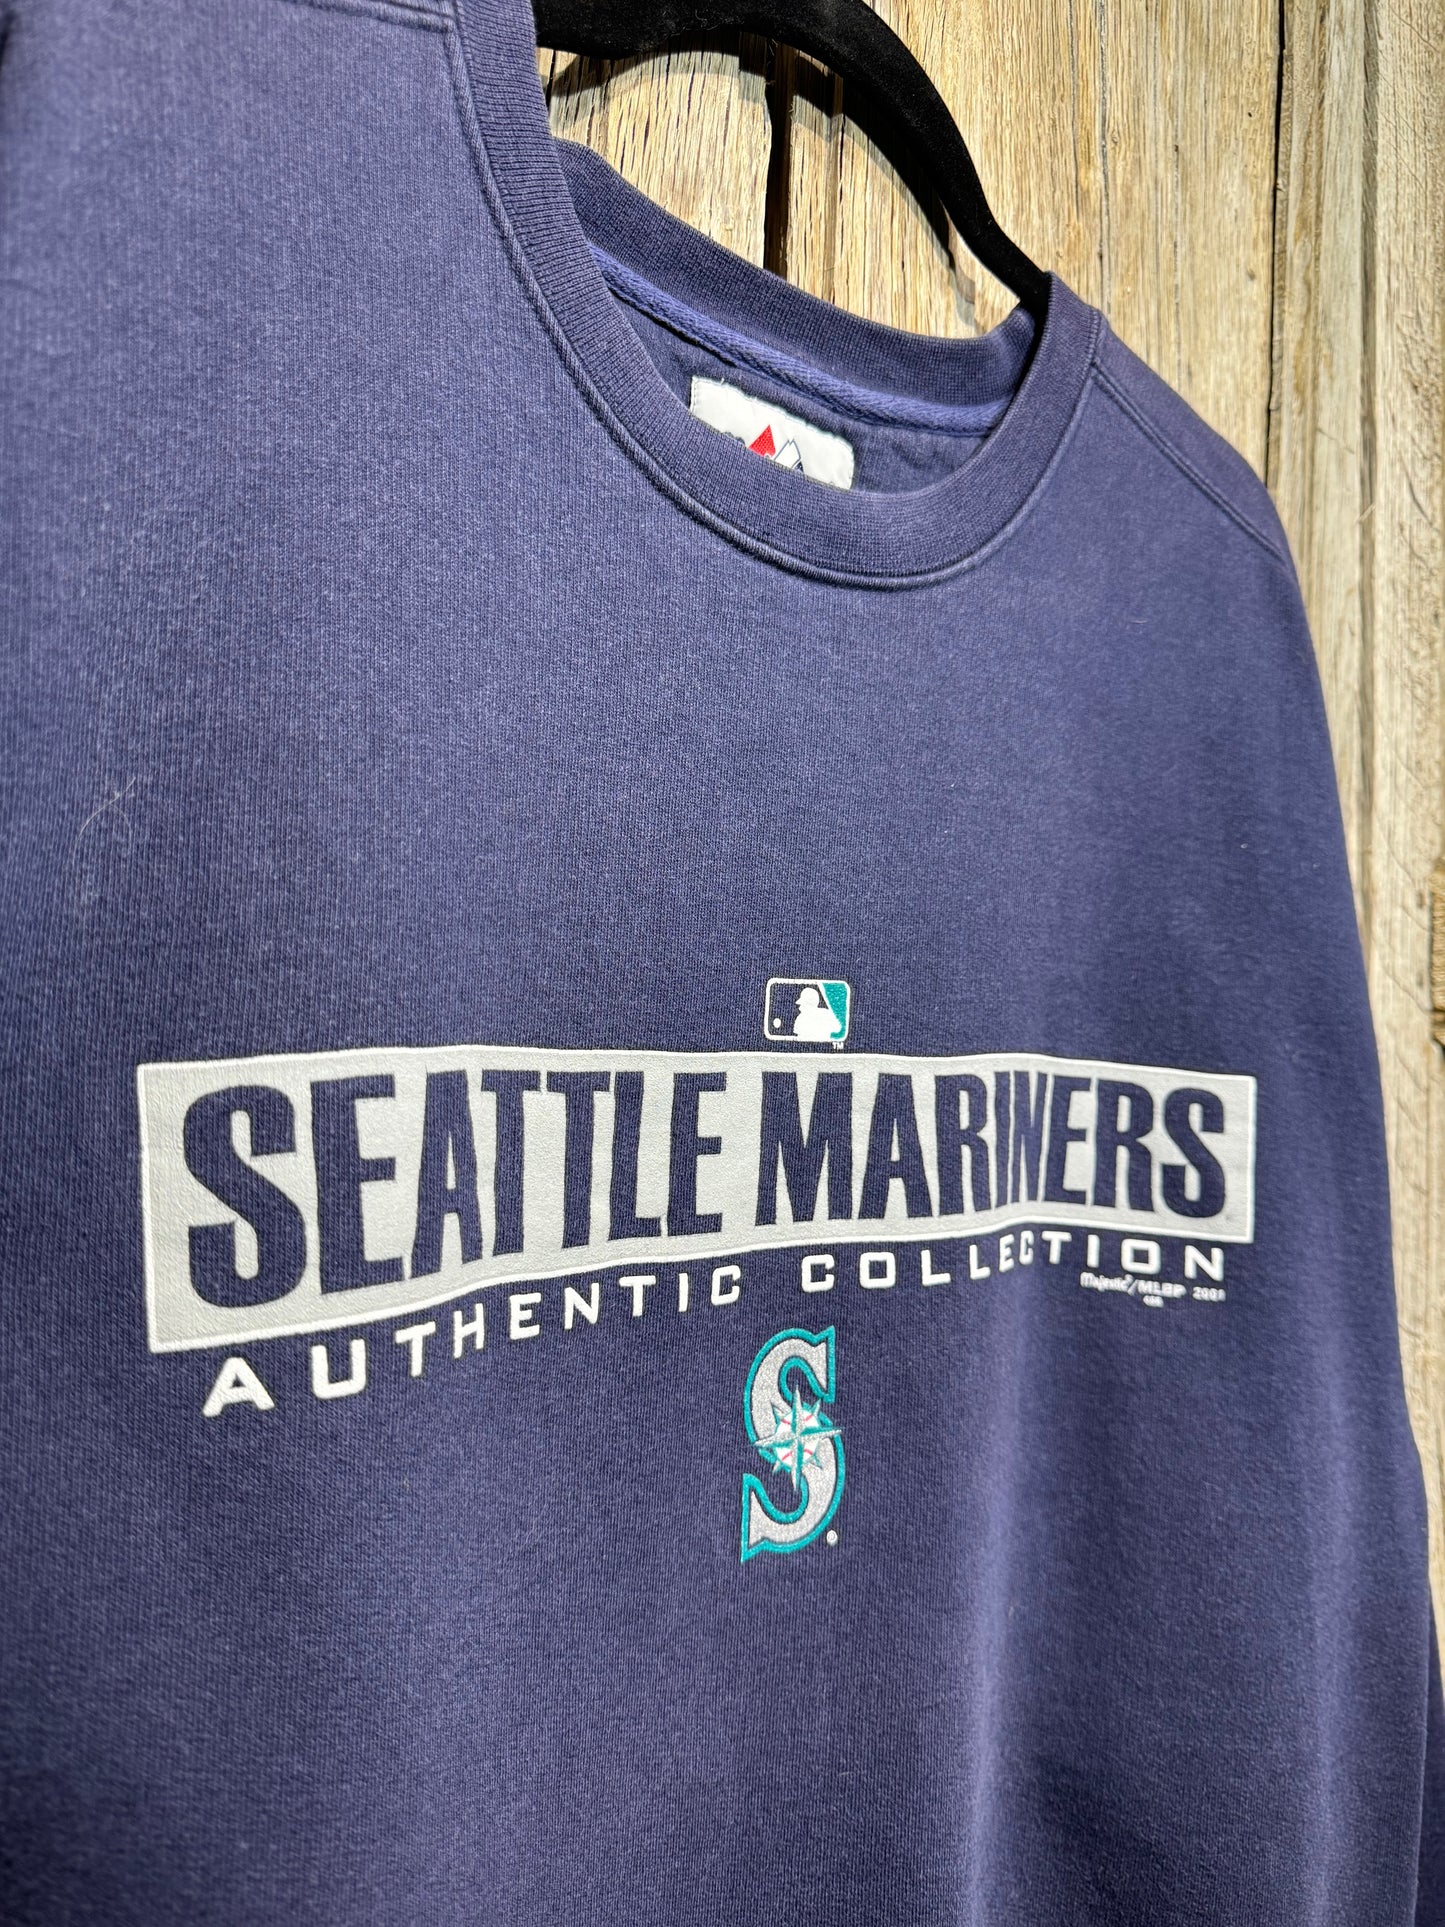 2001 Vintage Seattle Mariners Sweatshirt